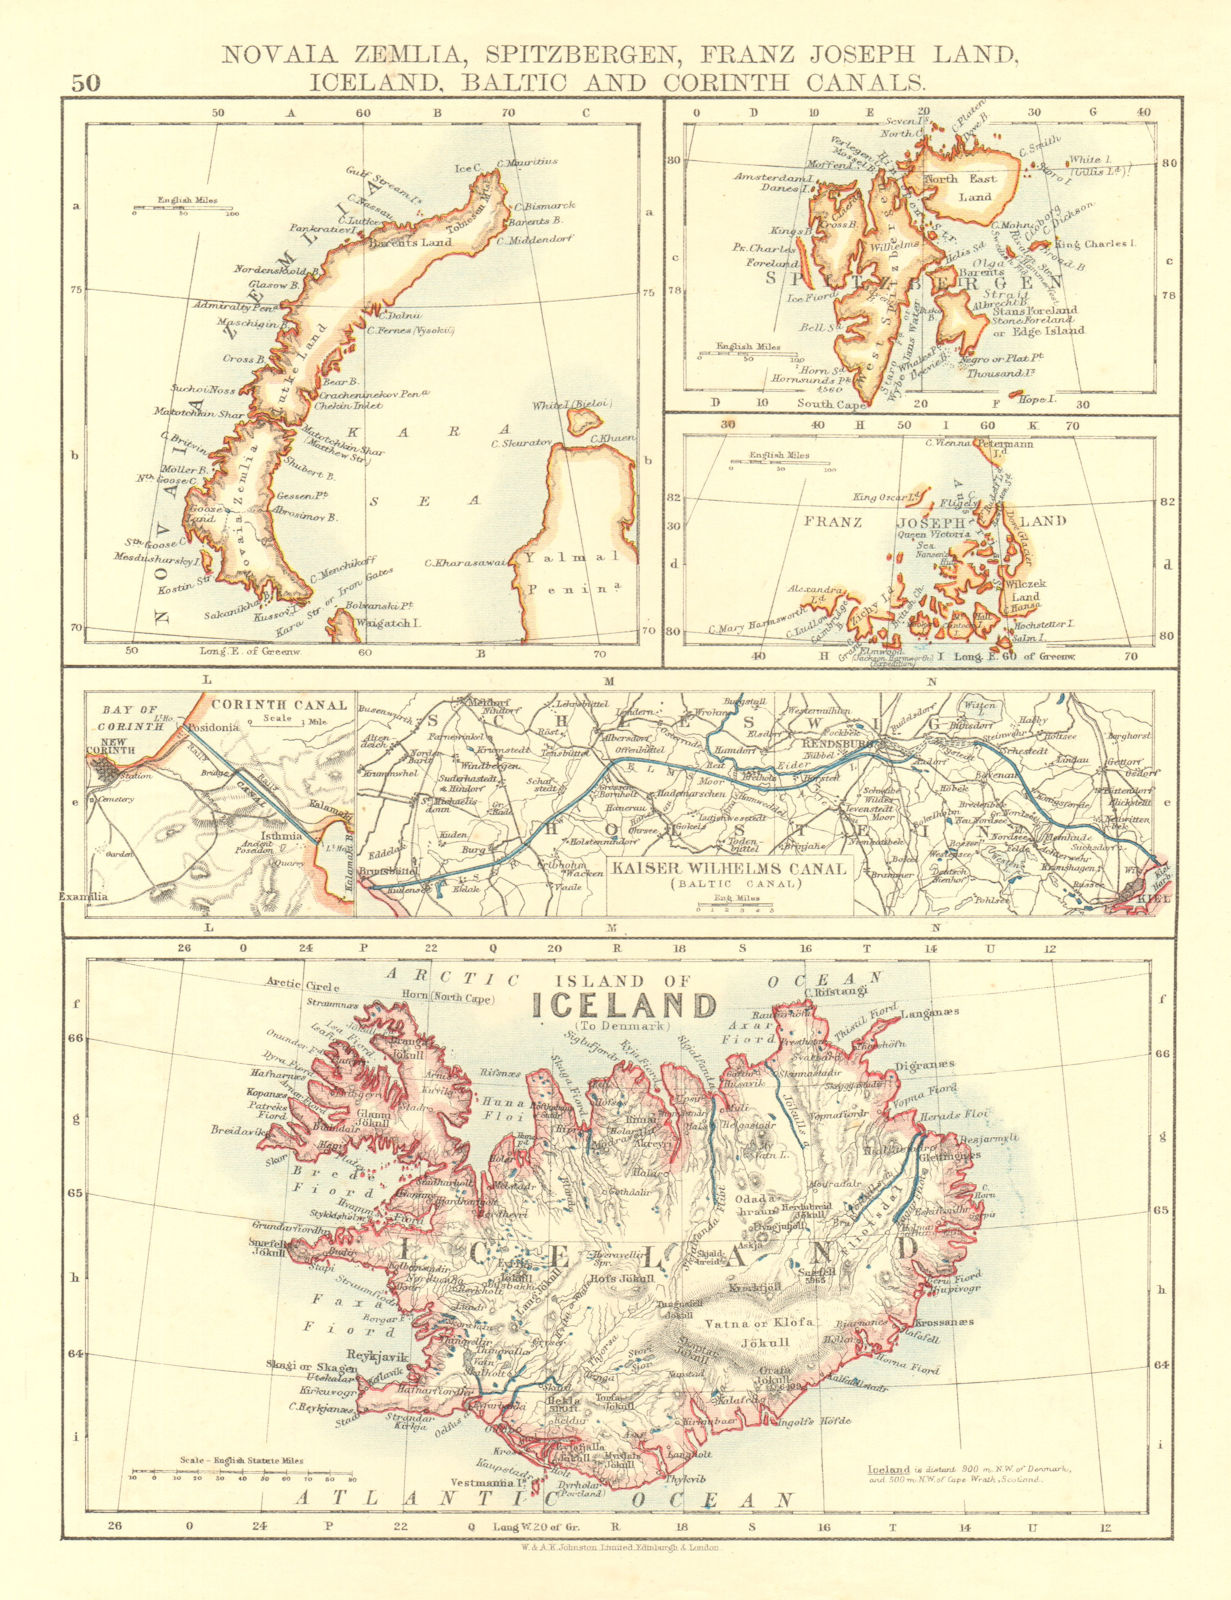 ARCTIC ISLANDS.Iceland Spitsbergen Franz Josef Land Novaya Zemlya 1906 old map